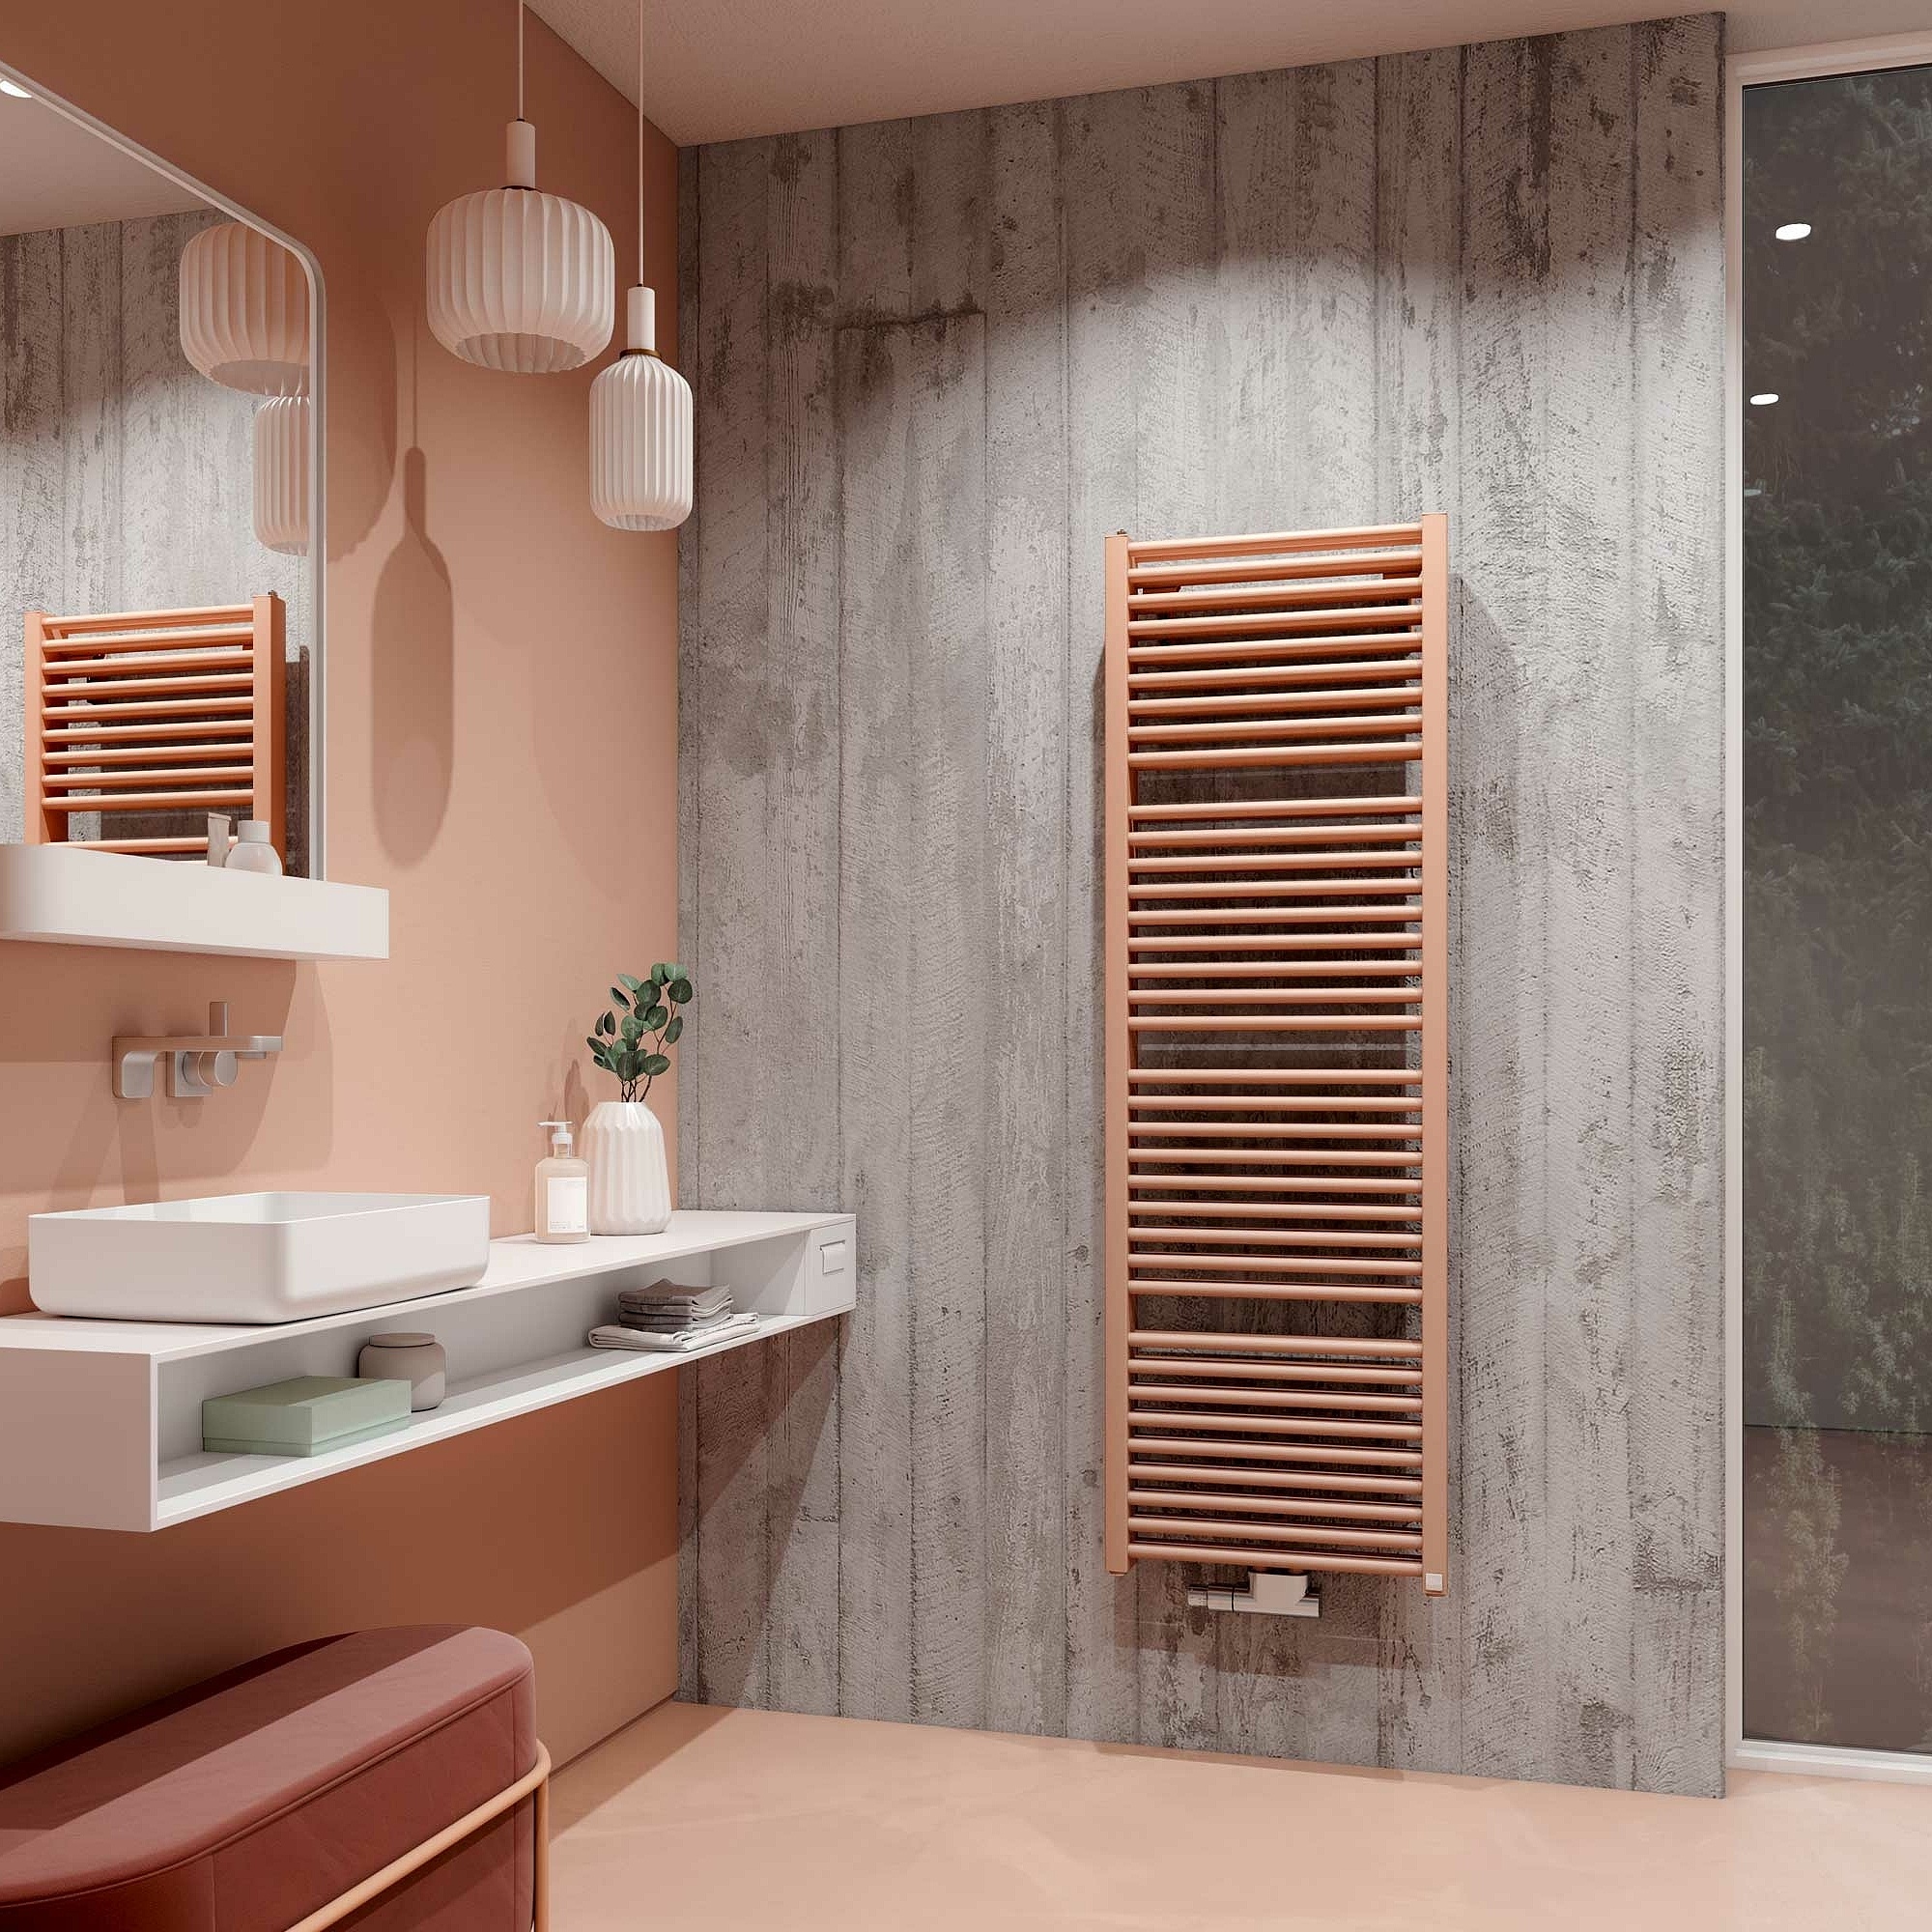 Kermi Duett designer and bathroom radiators – classic bathroom heating design with double the power.